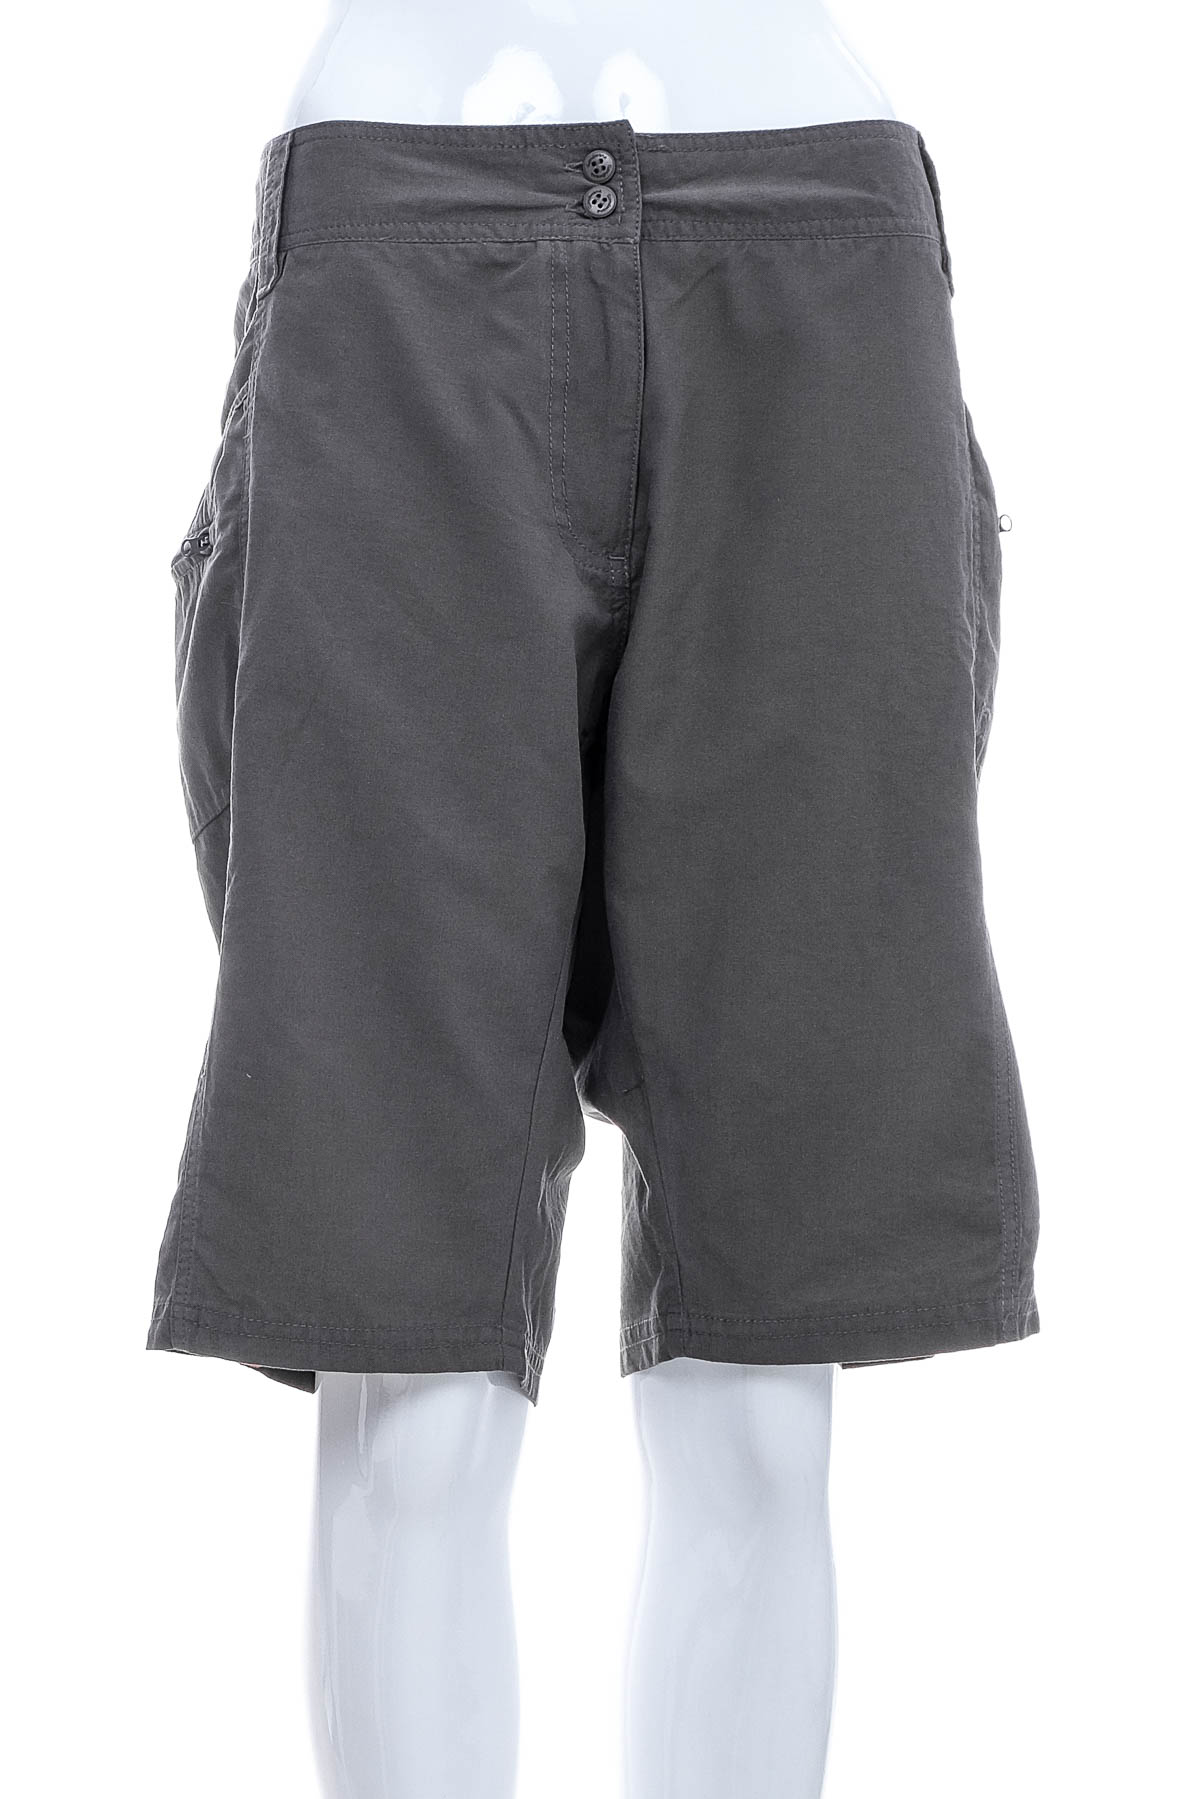 Female shorts - Gondwana - 0